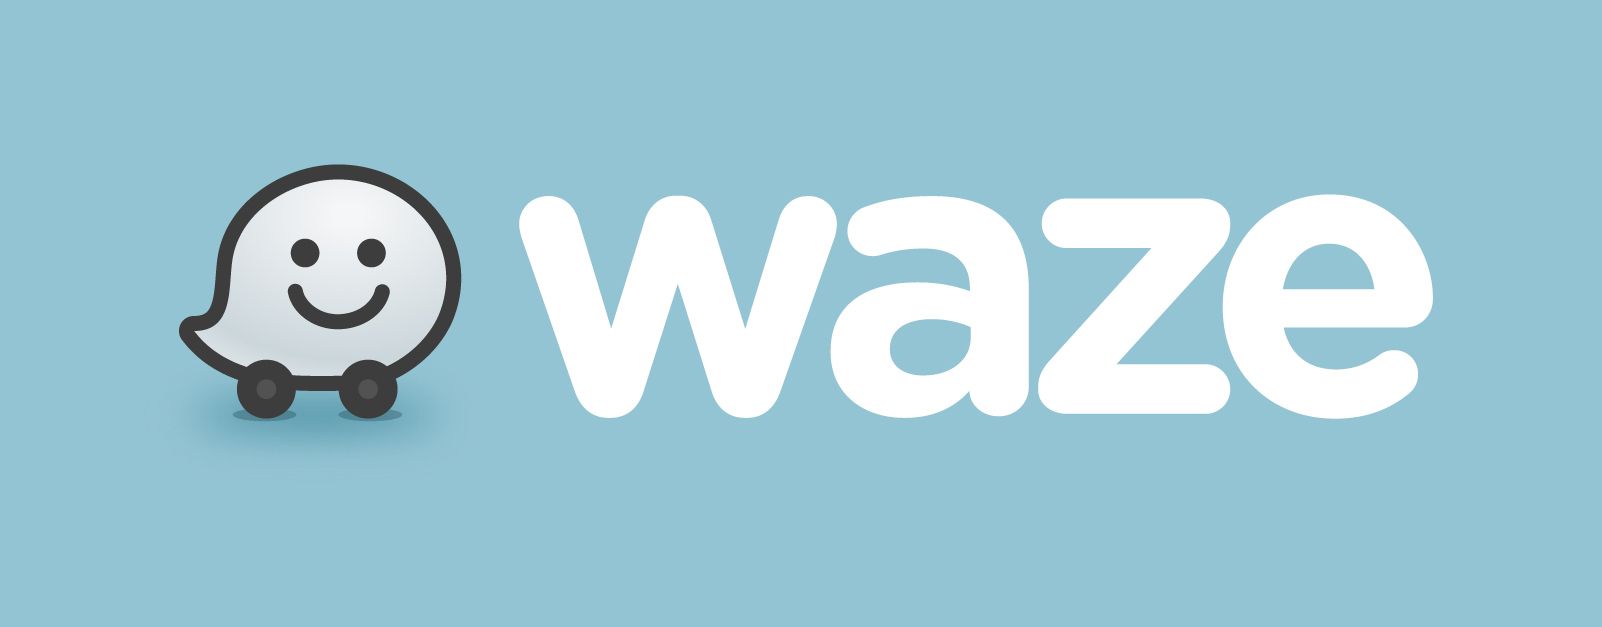 Waze Benefits Drivers with Community Intelligence 1